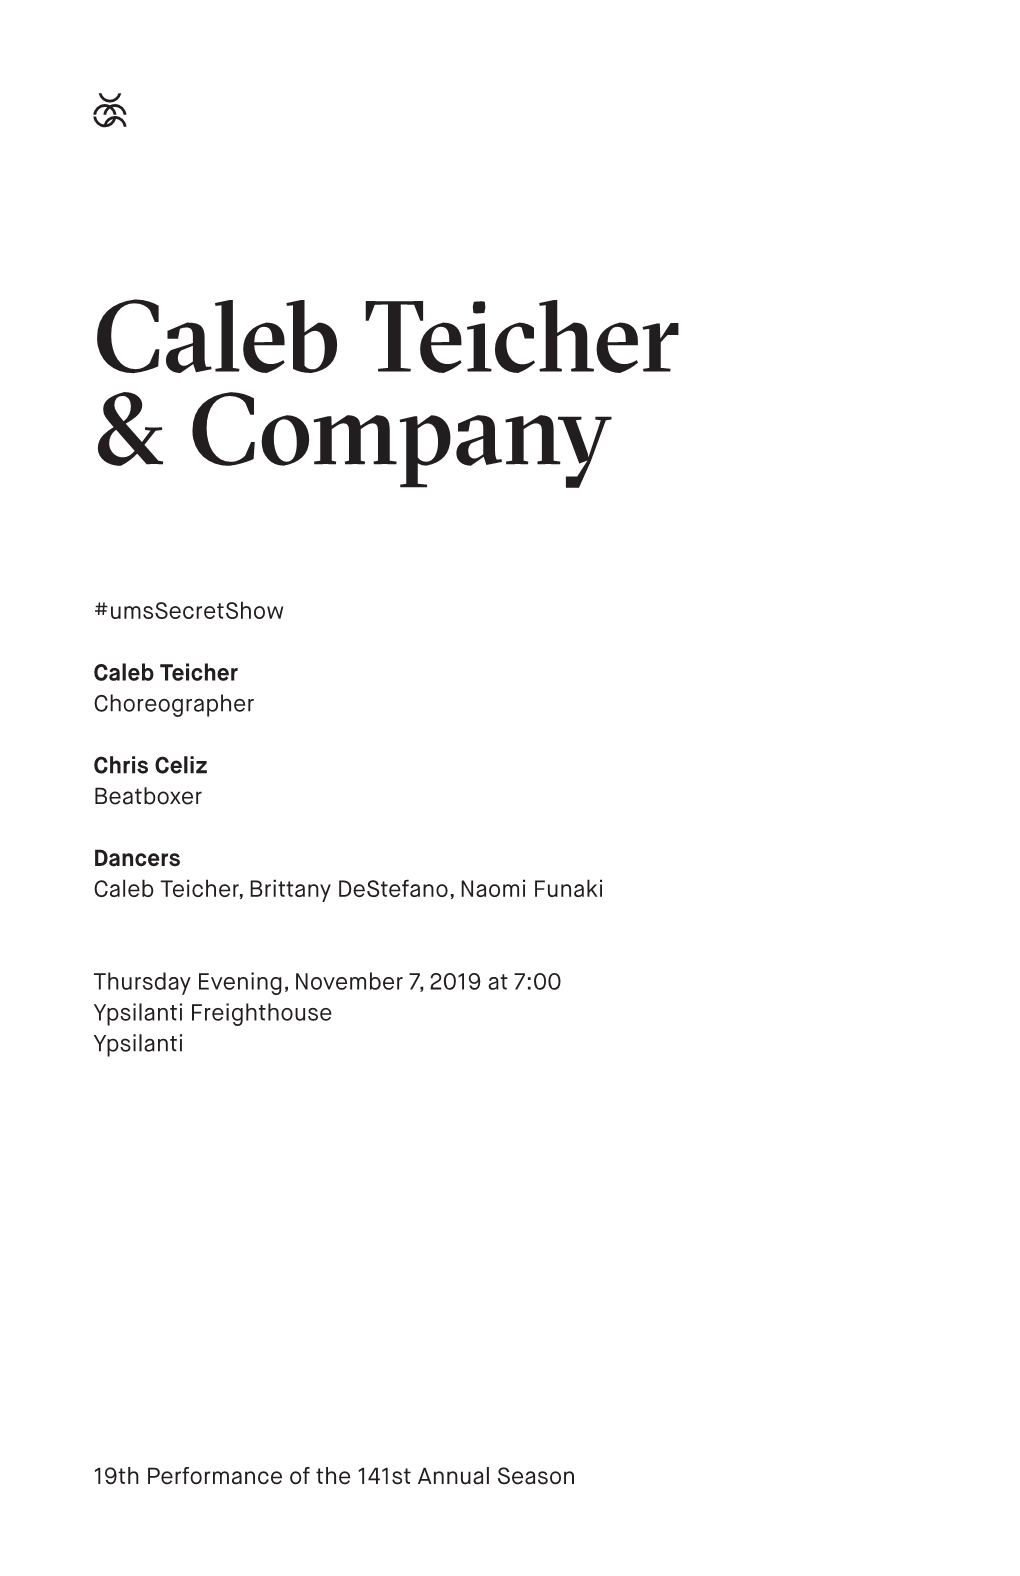 Caleb Teicher & Company